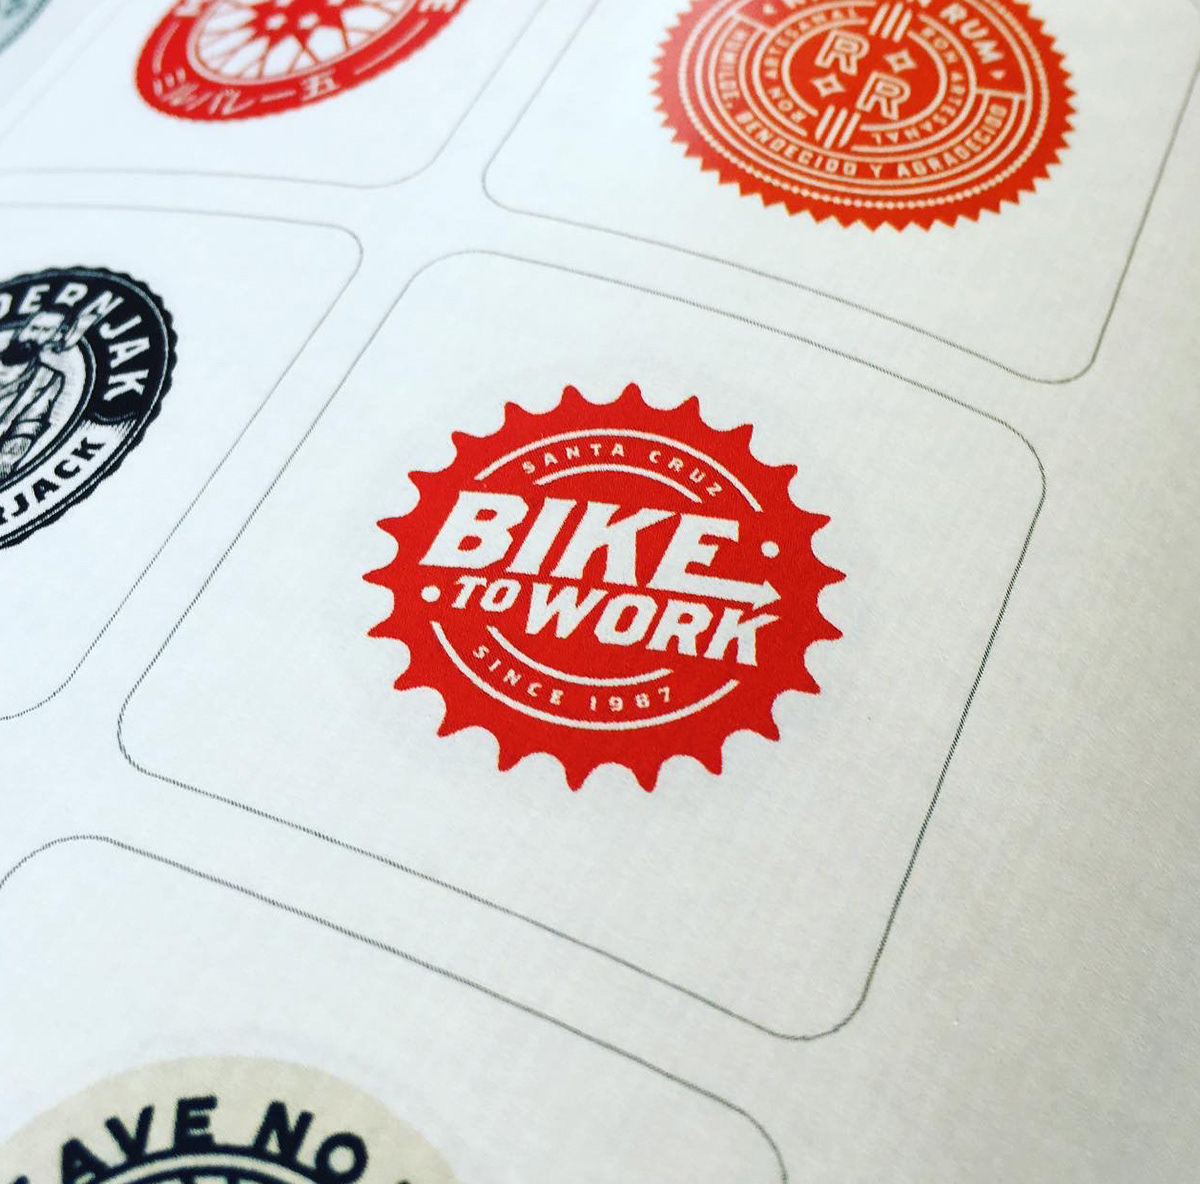 chrome eBay santa cruz Bicycles design branding  typographic